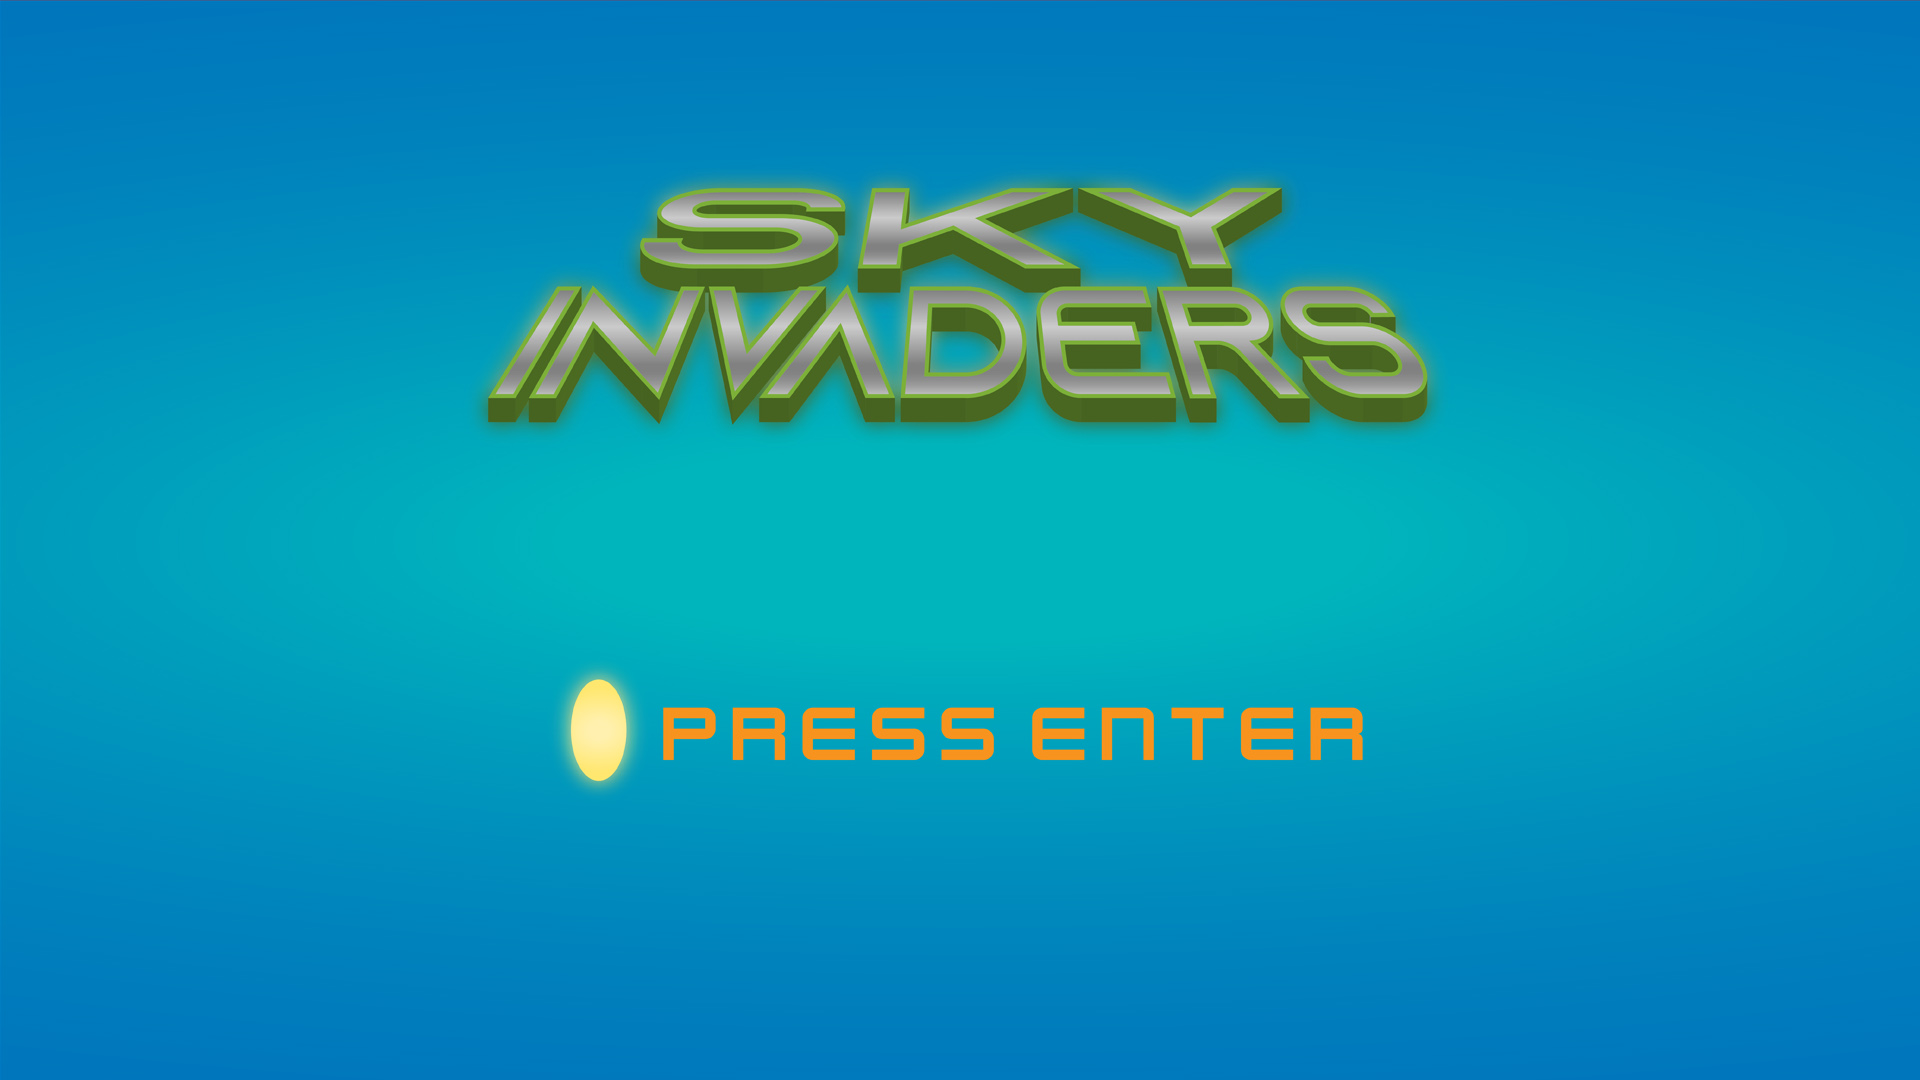 Sky Invaders